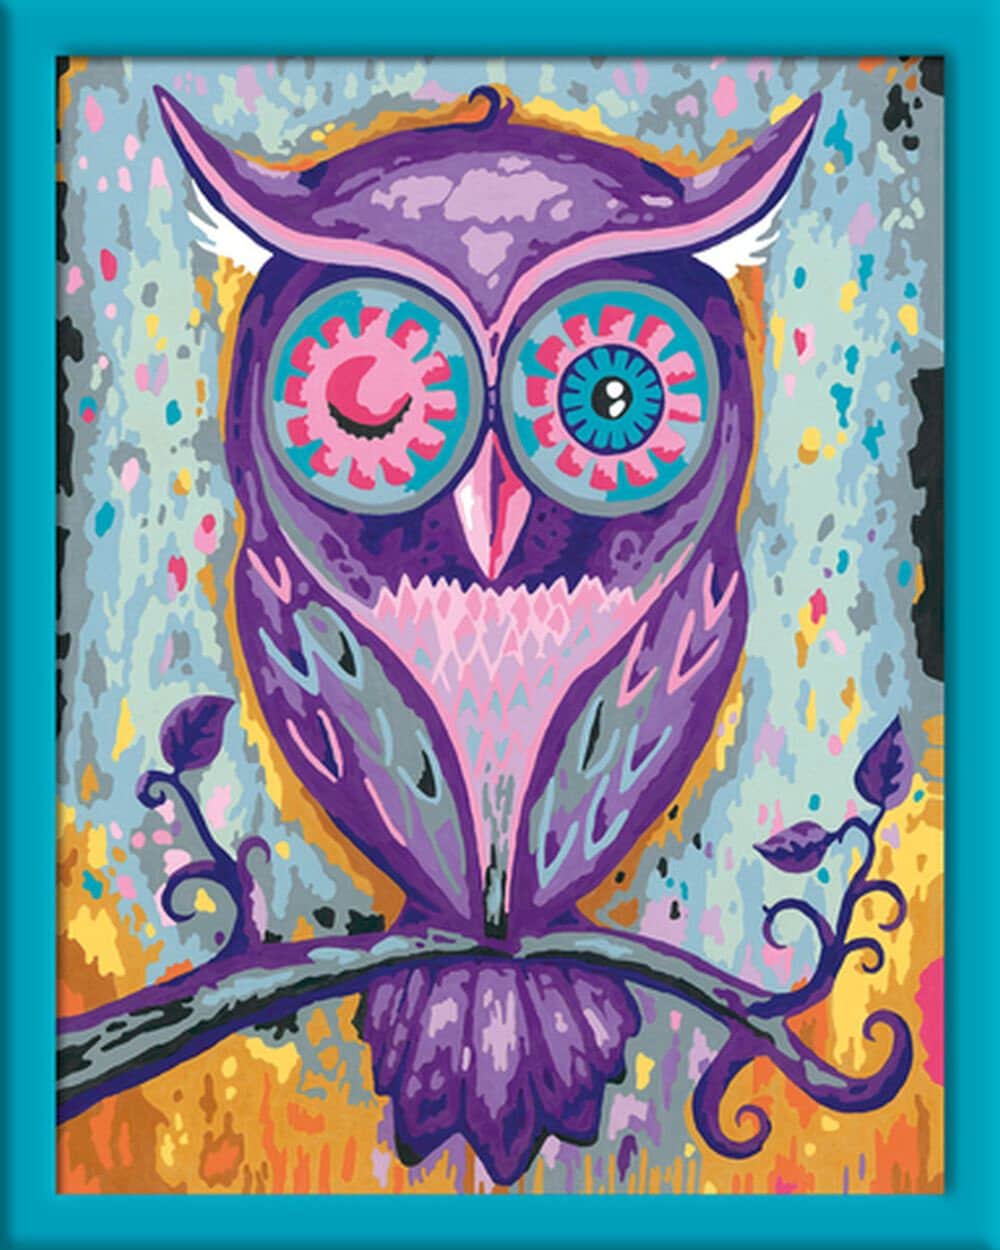 Ravensburger, CreArt Adult - Dreaming Owl